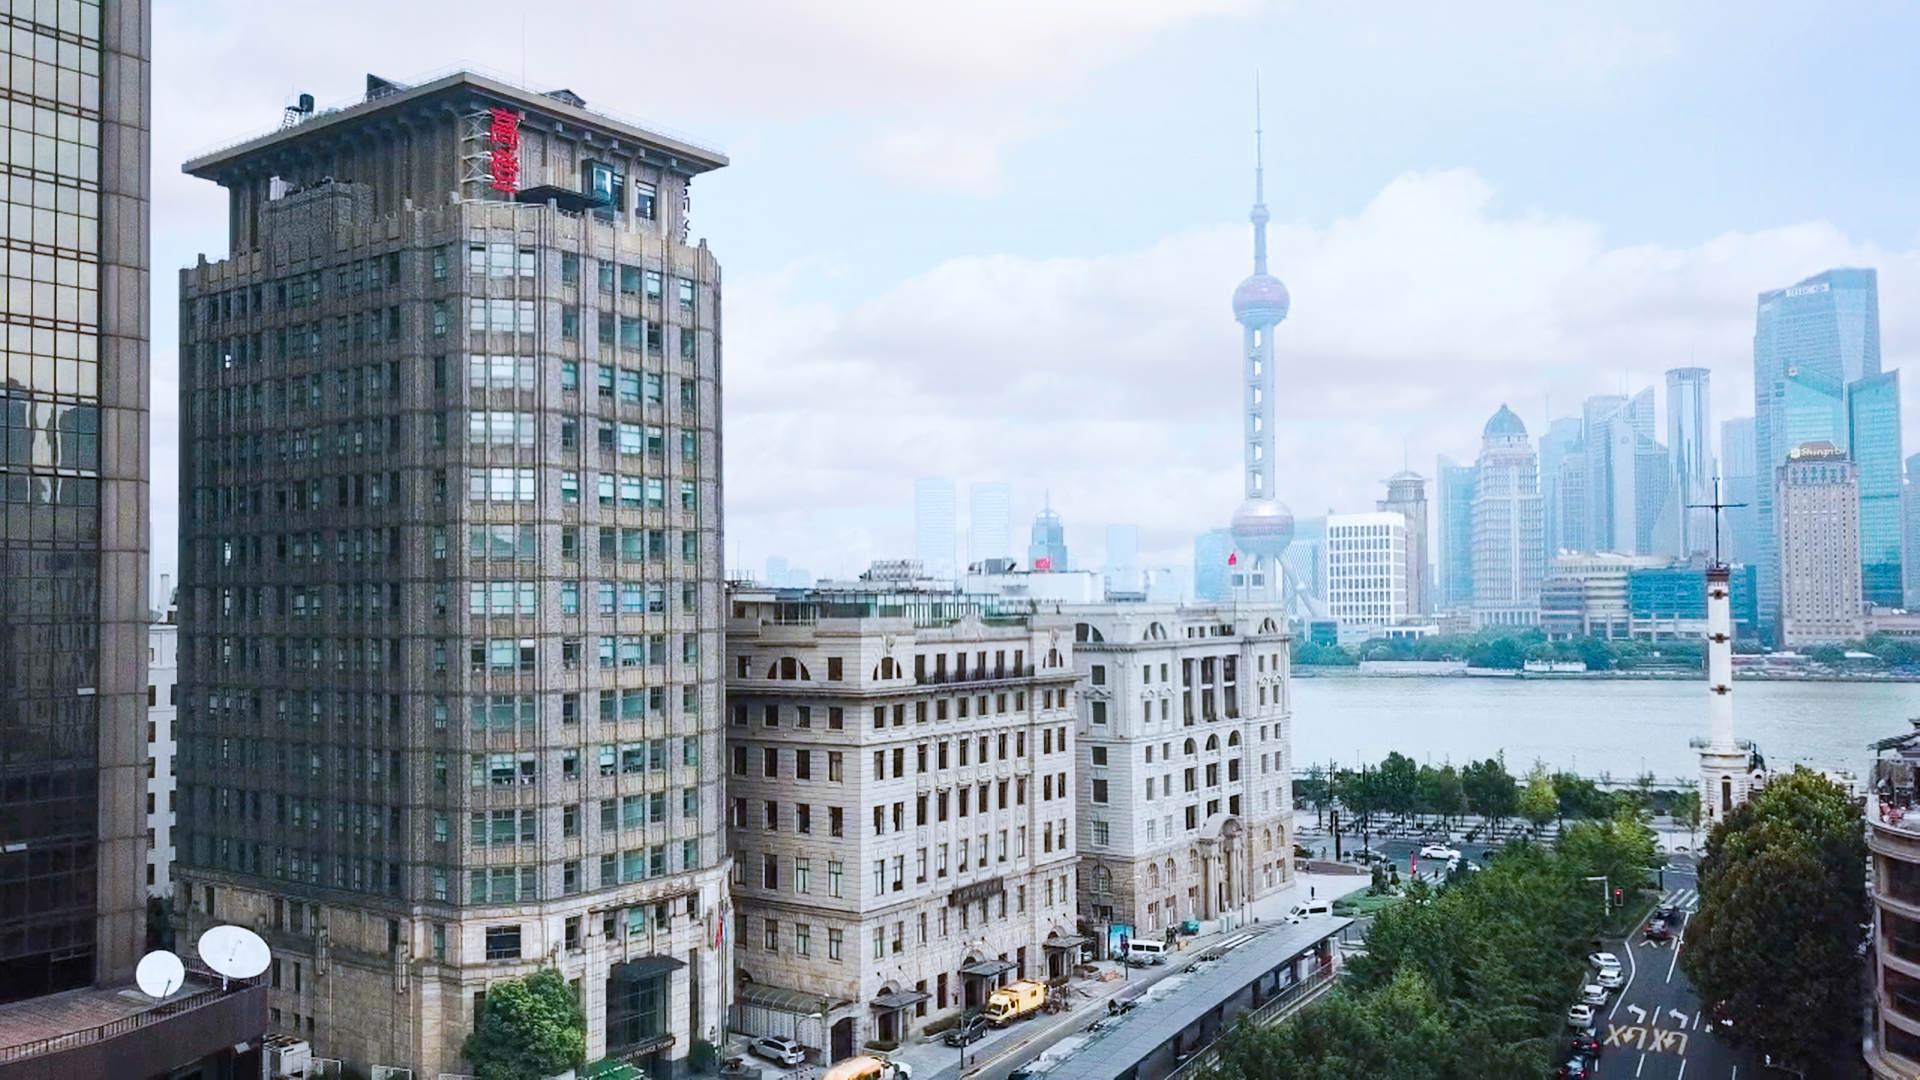 “Shanghai Golden United Construction Development Co., Ltd